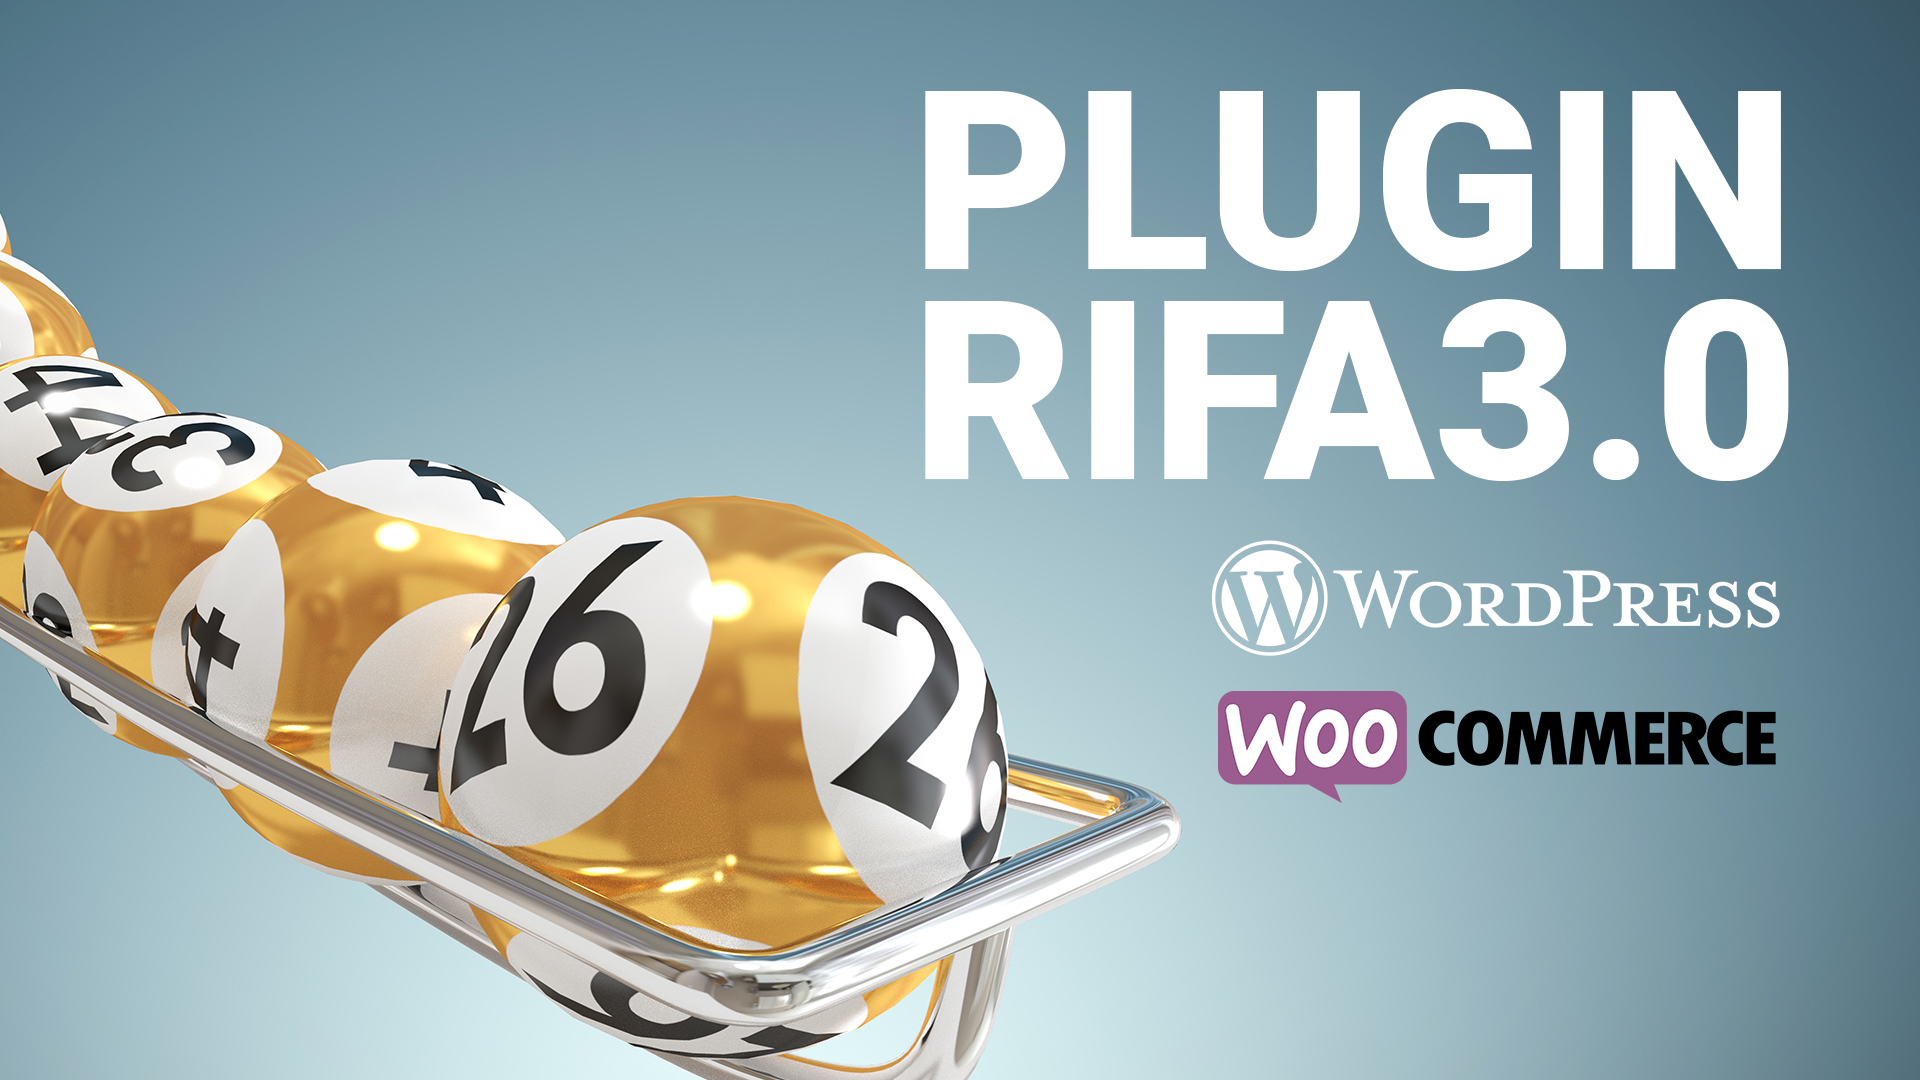 Plugin Rifa para WordPress + WooCommerce versão 3.0.0